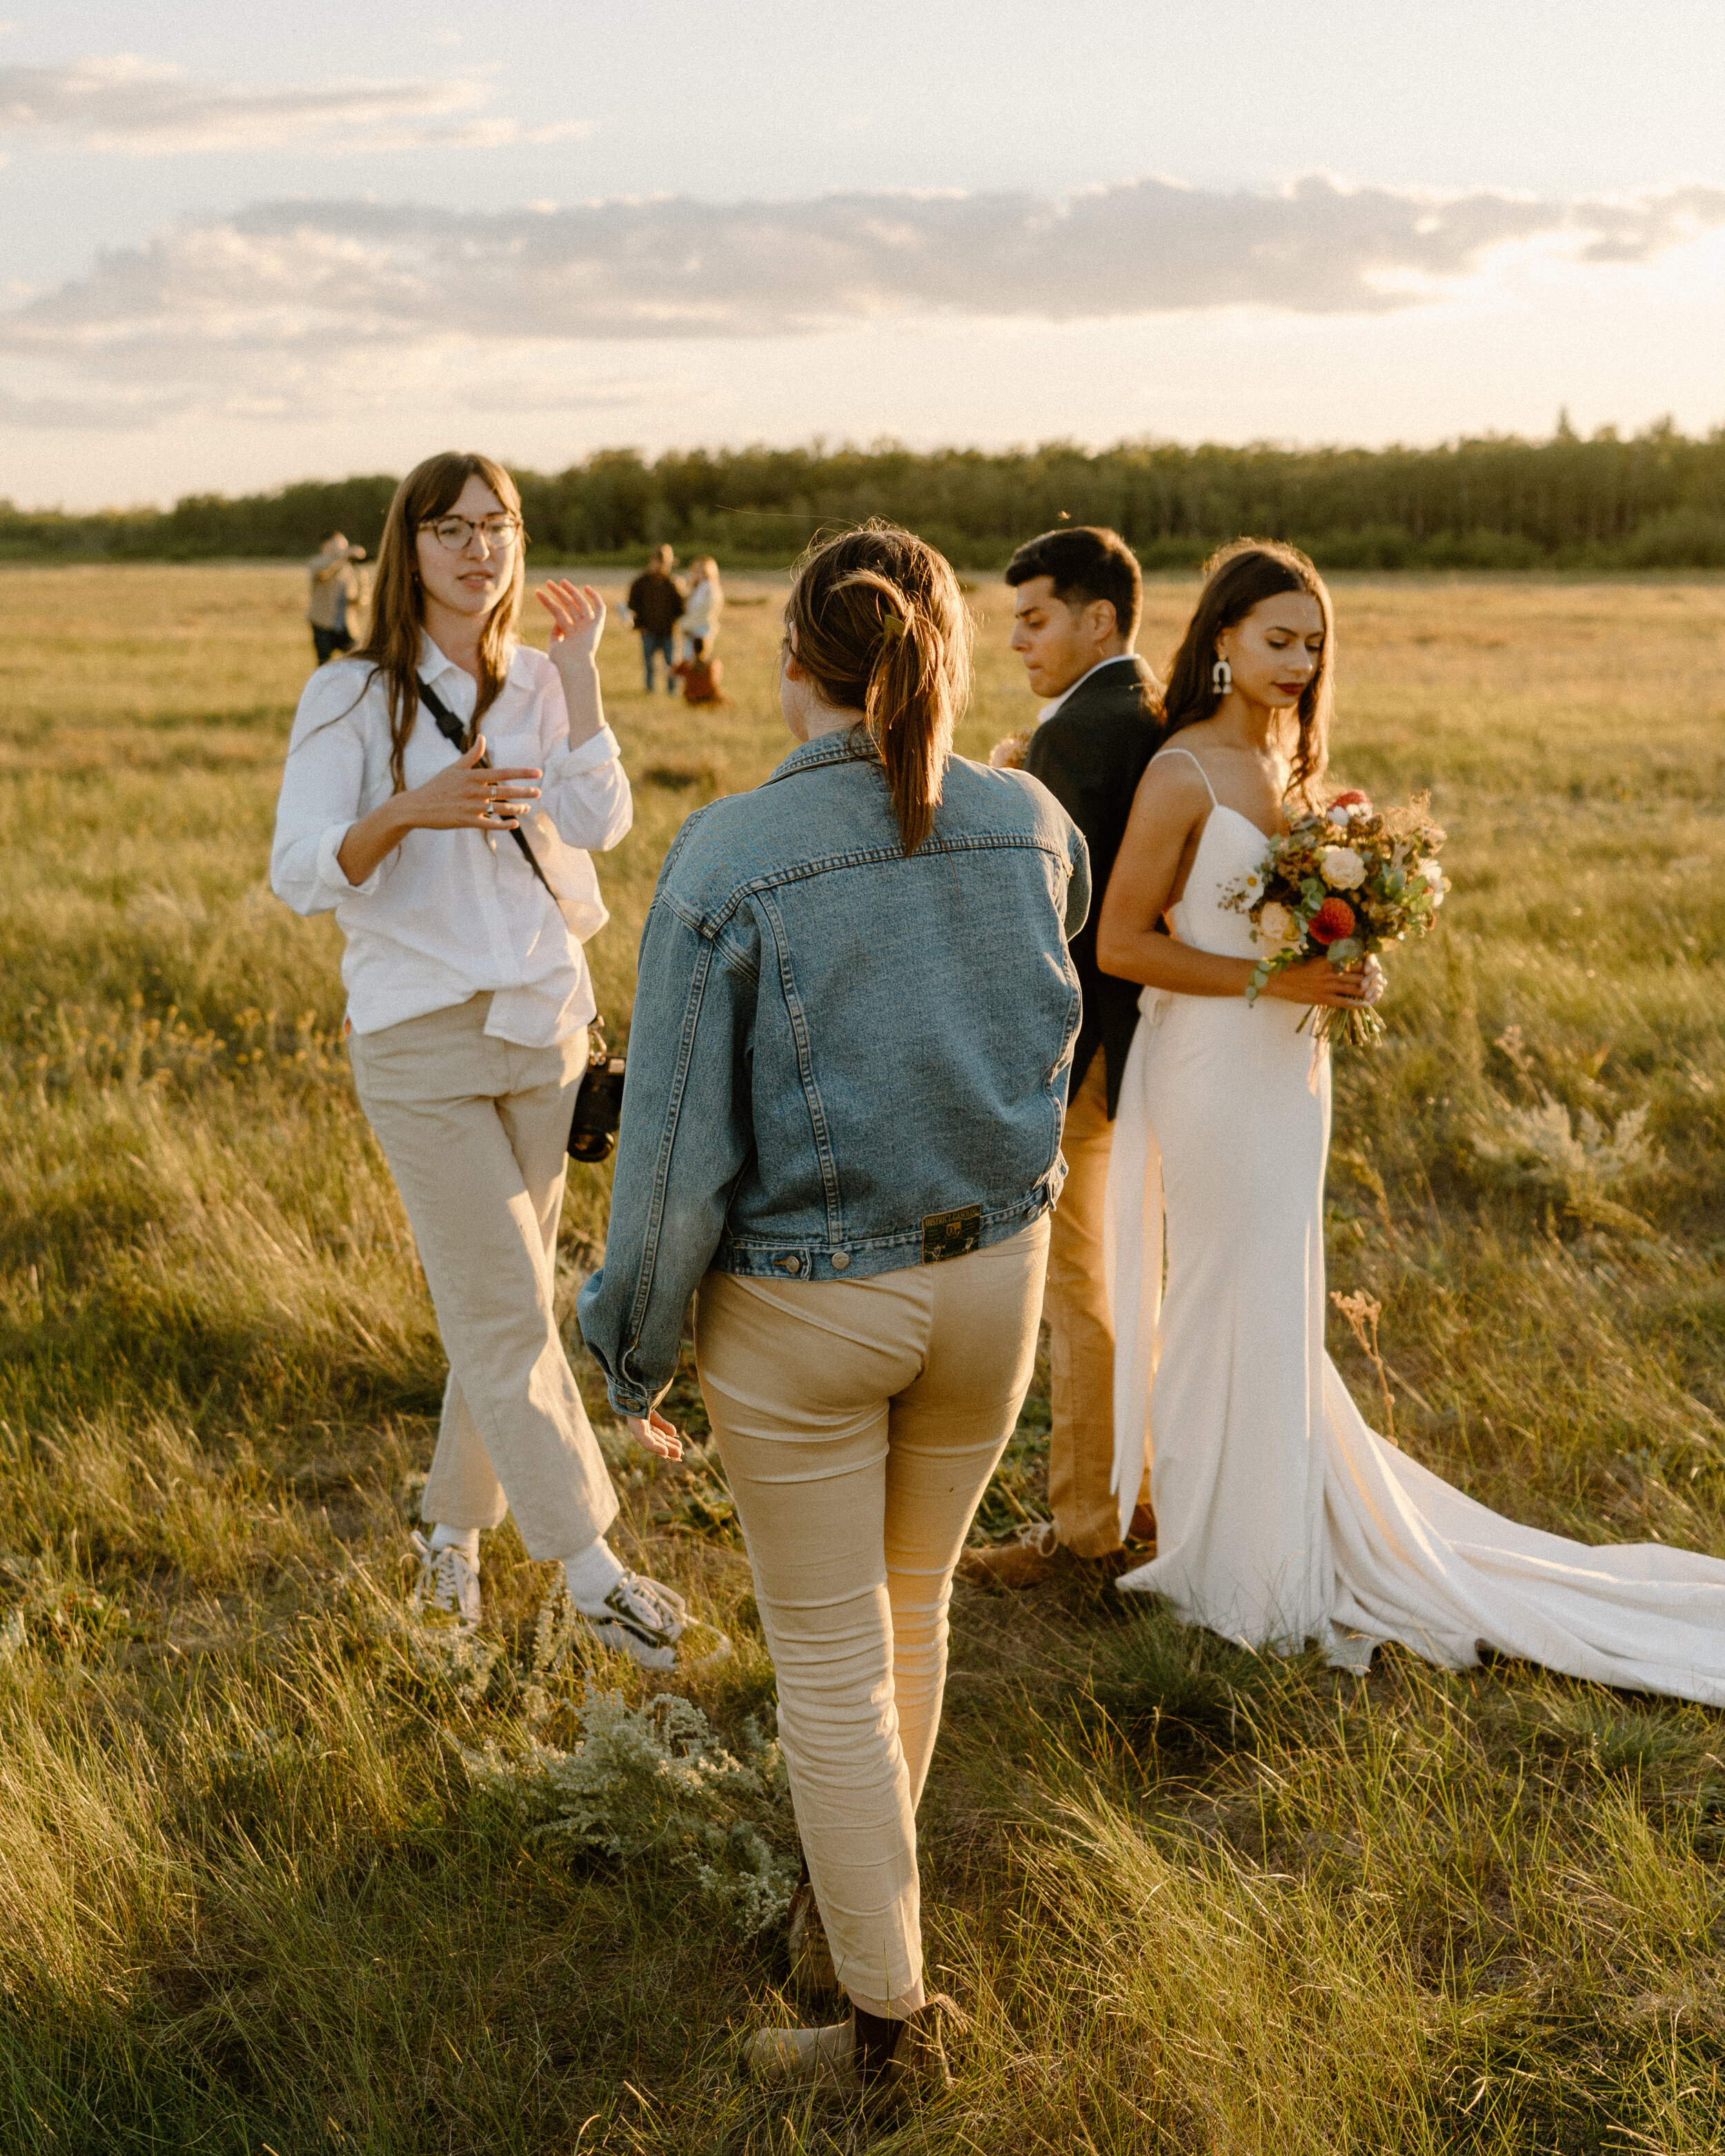 Stay-Close-2020-Wedding-Workshop-Brooke-Mos-Photography-03974.jpg